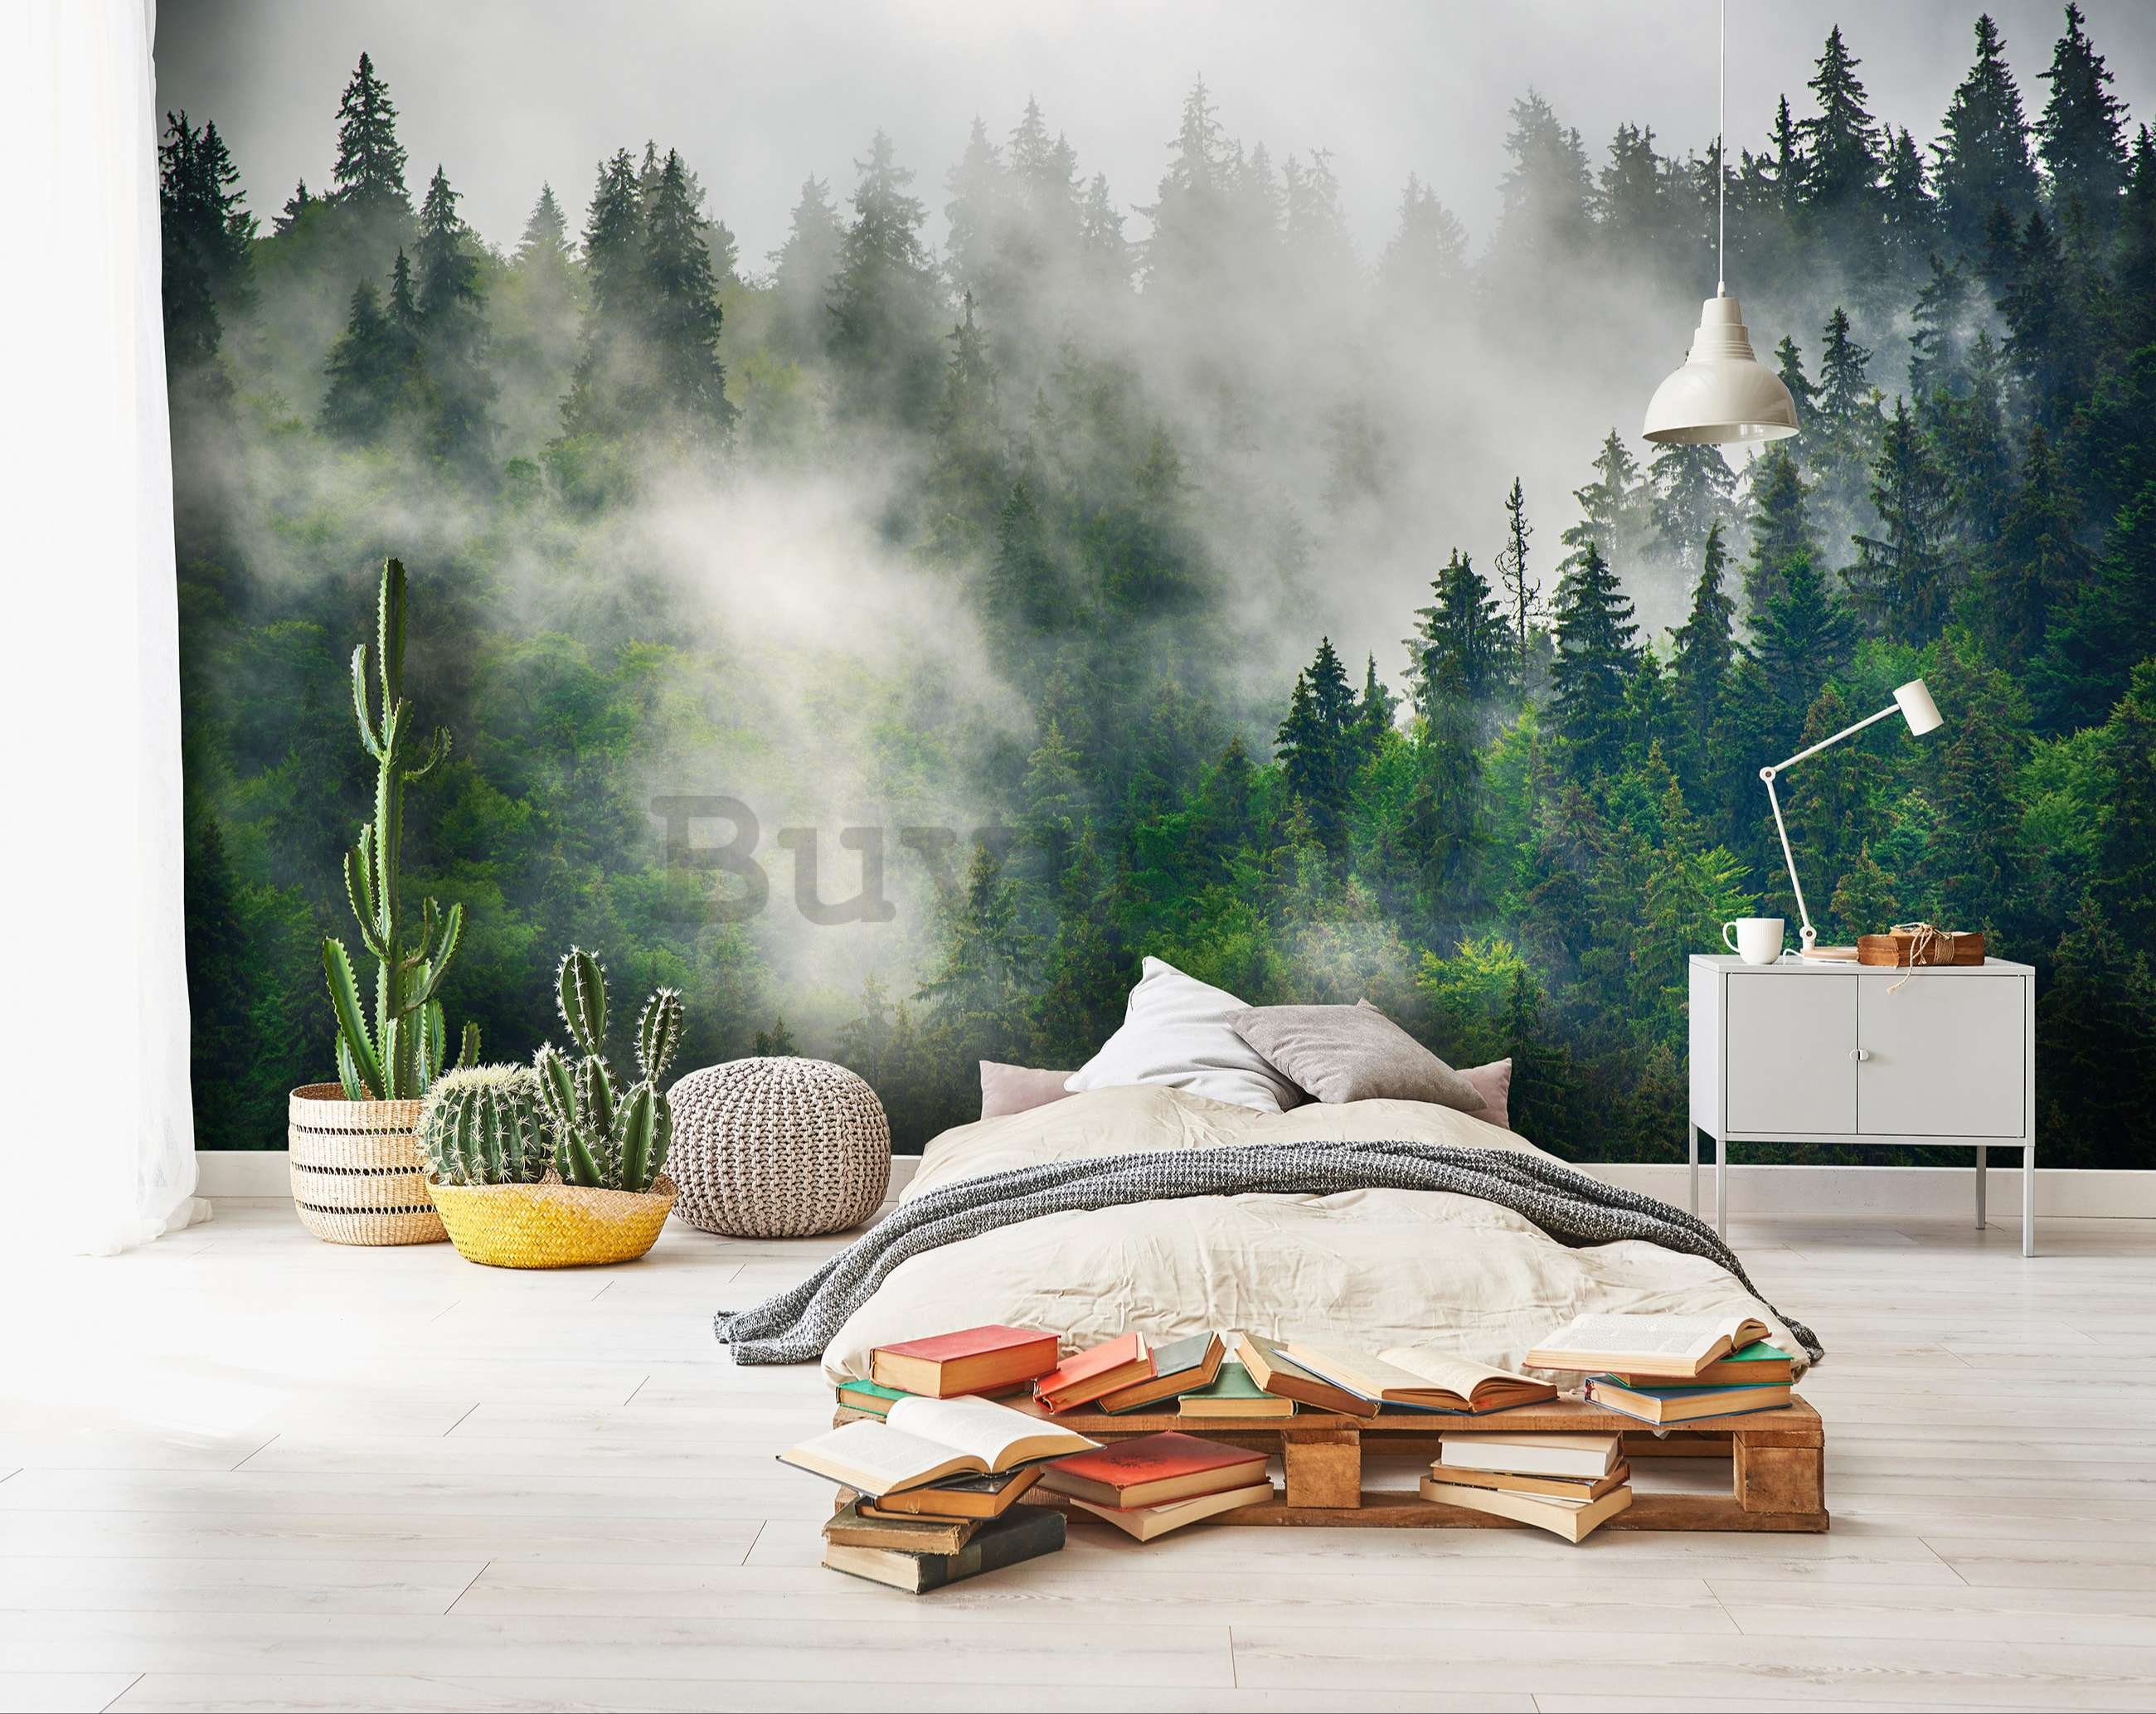 Fotomurale in TNT: Nebbia sulla foresta (5) - 152,5x104 cm